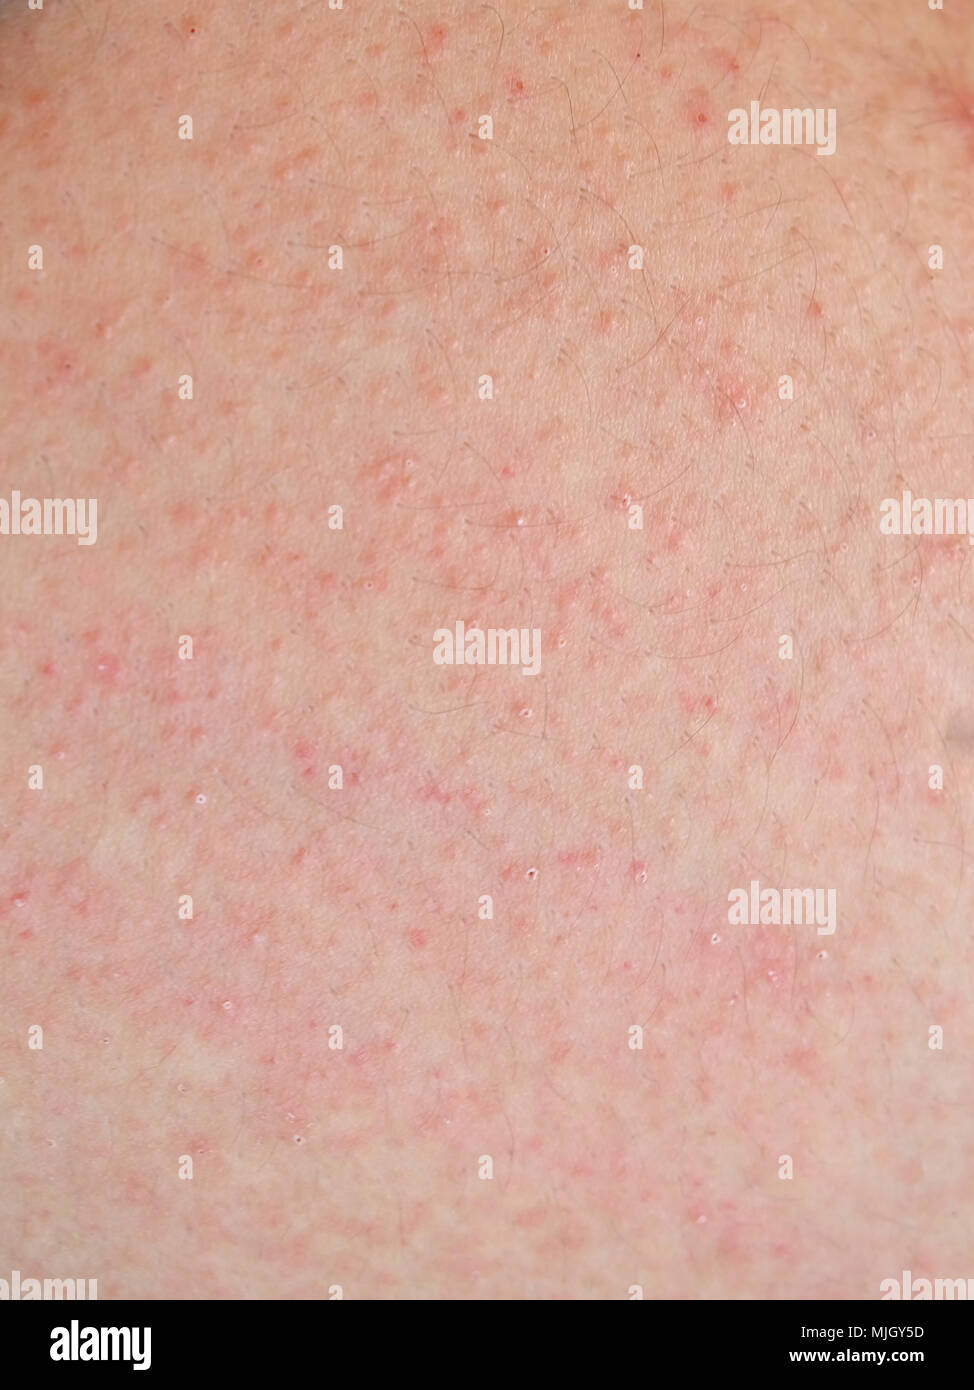 Allergic Rash Dermatitis Skin Of Patient Stock Photo Alamy